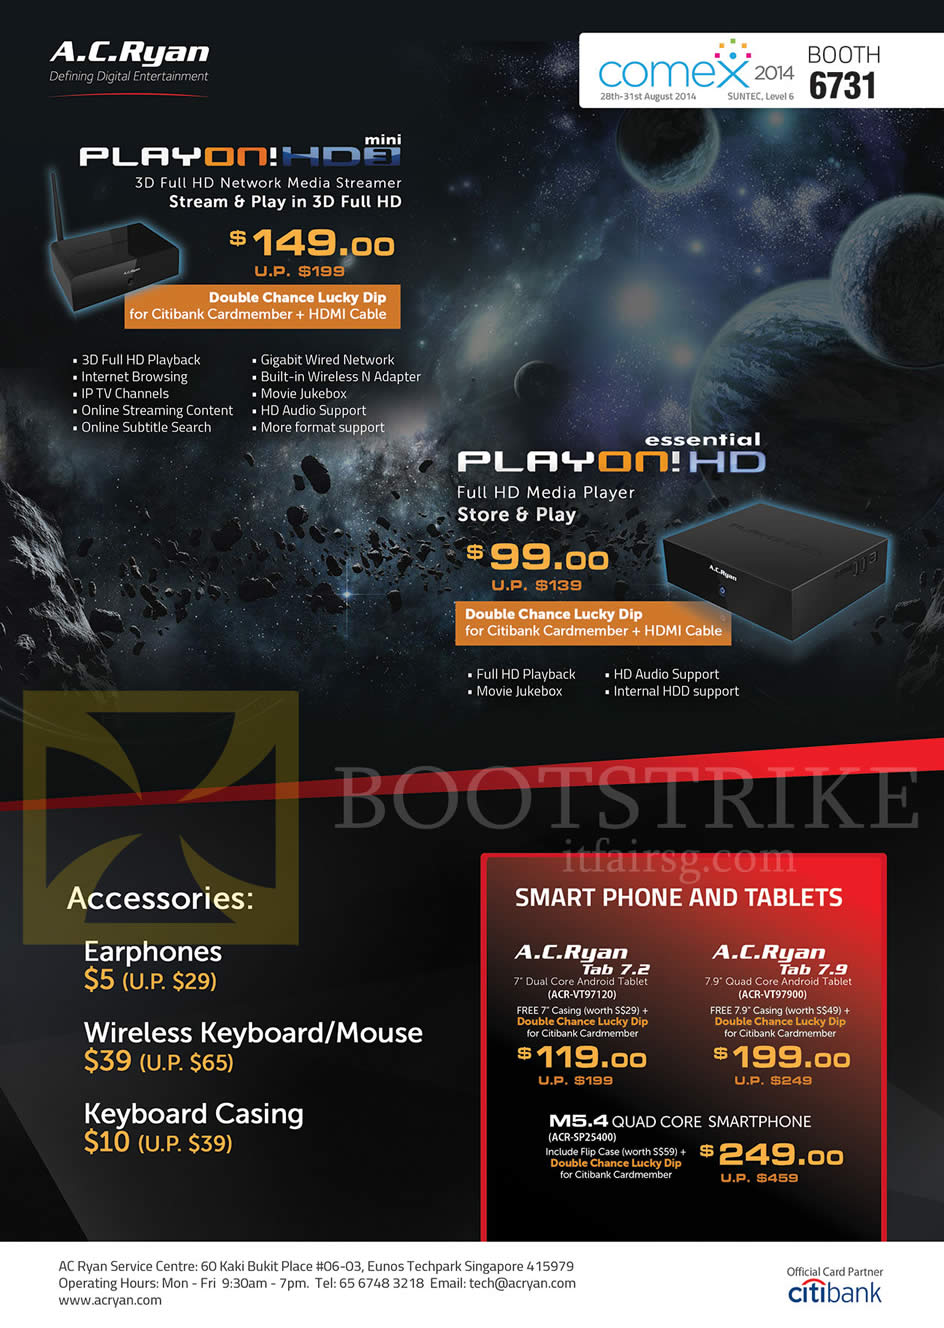 COMEX 2014 price list image brochure of AC Ryan Playon HD2 Mini Media Streamer, PlayOn HD Essential Media Player, Tab 7.2 ACR-VT97120, Tab 7.9 ACR-VT97900, M5.4 Smartphone SP25400, Accessories